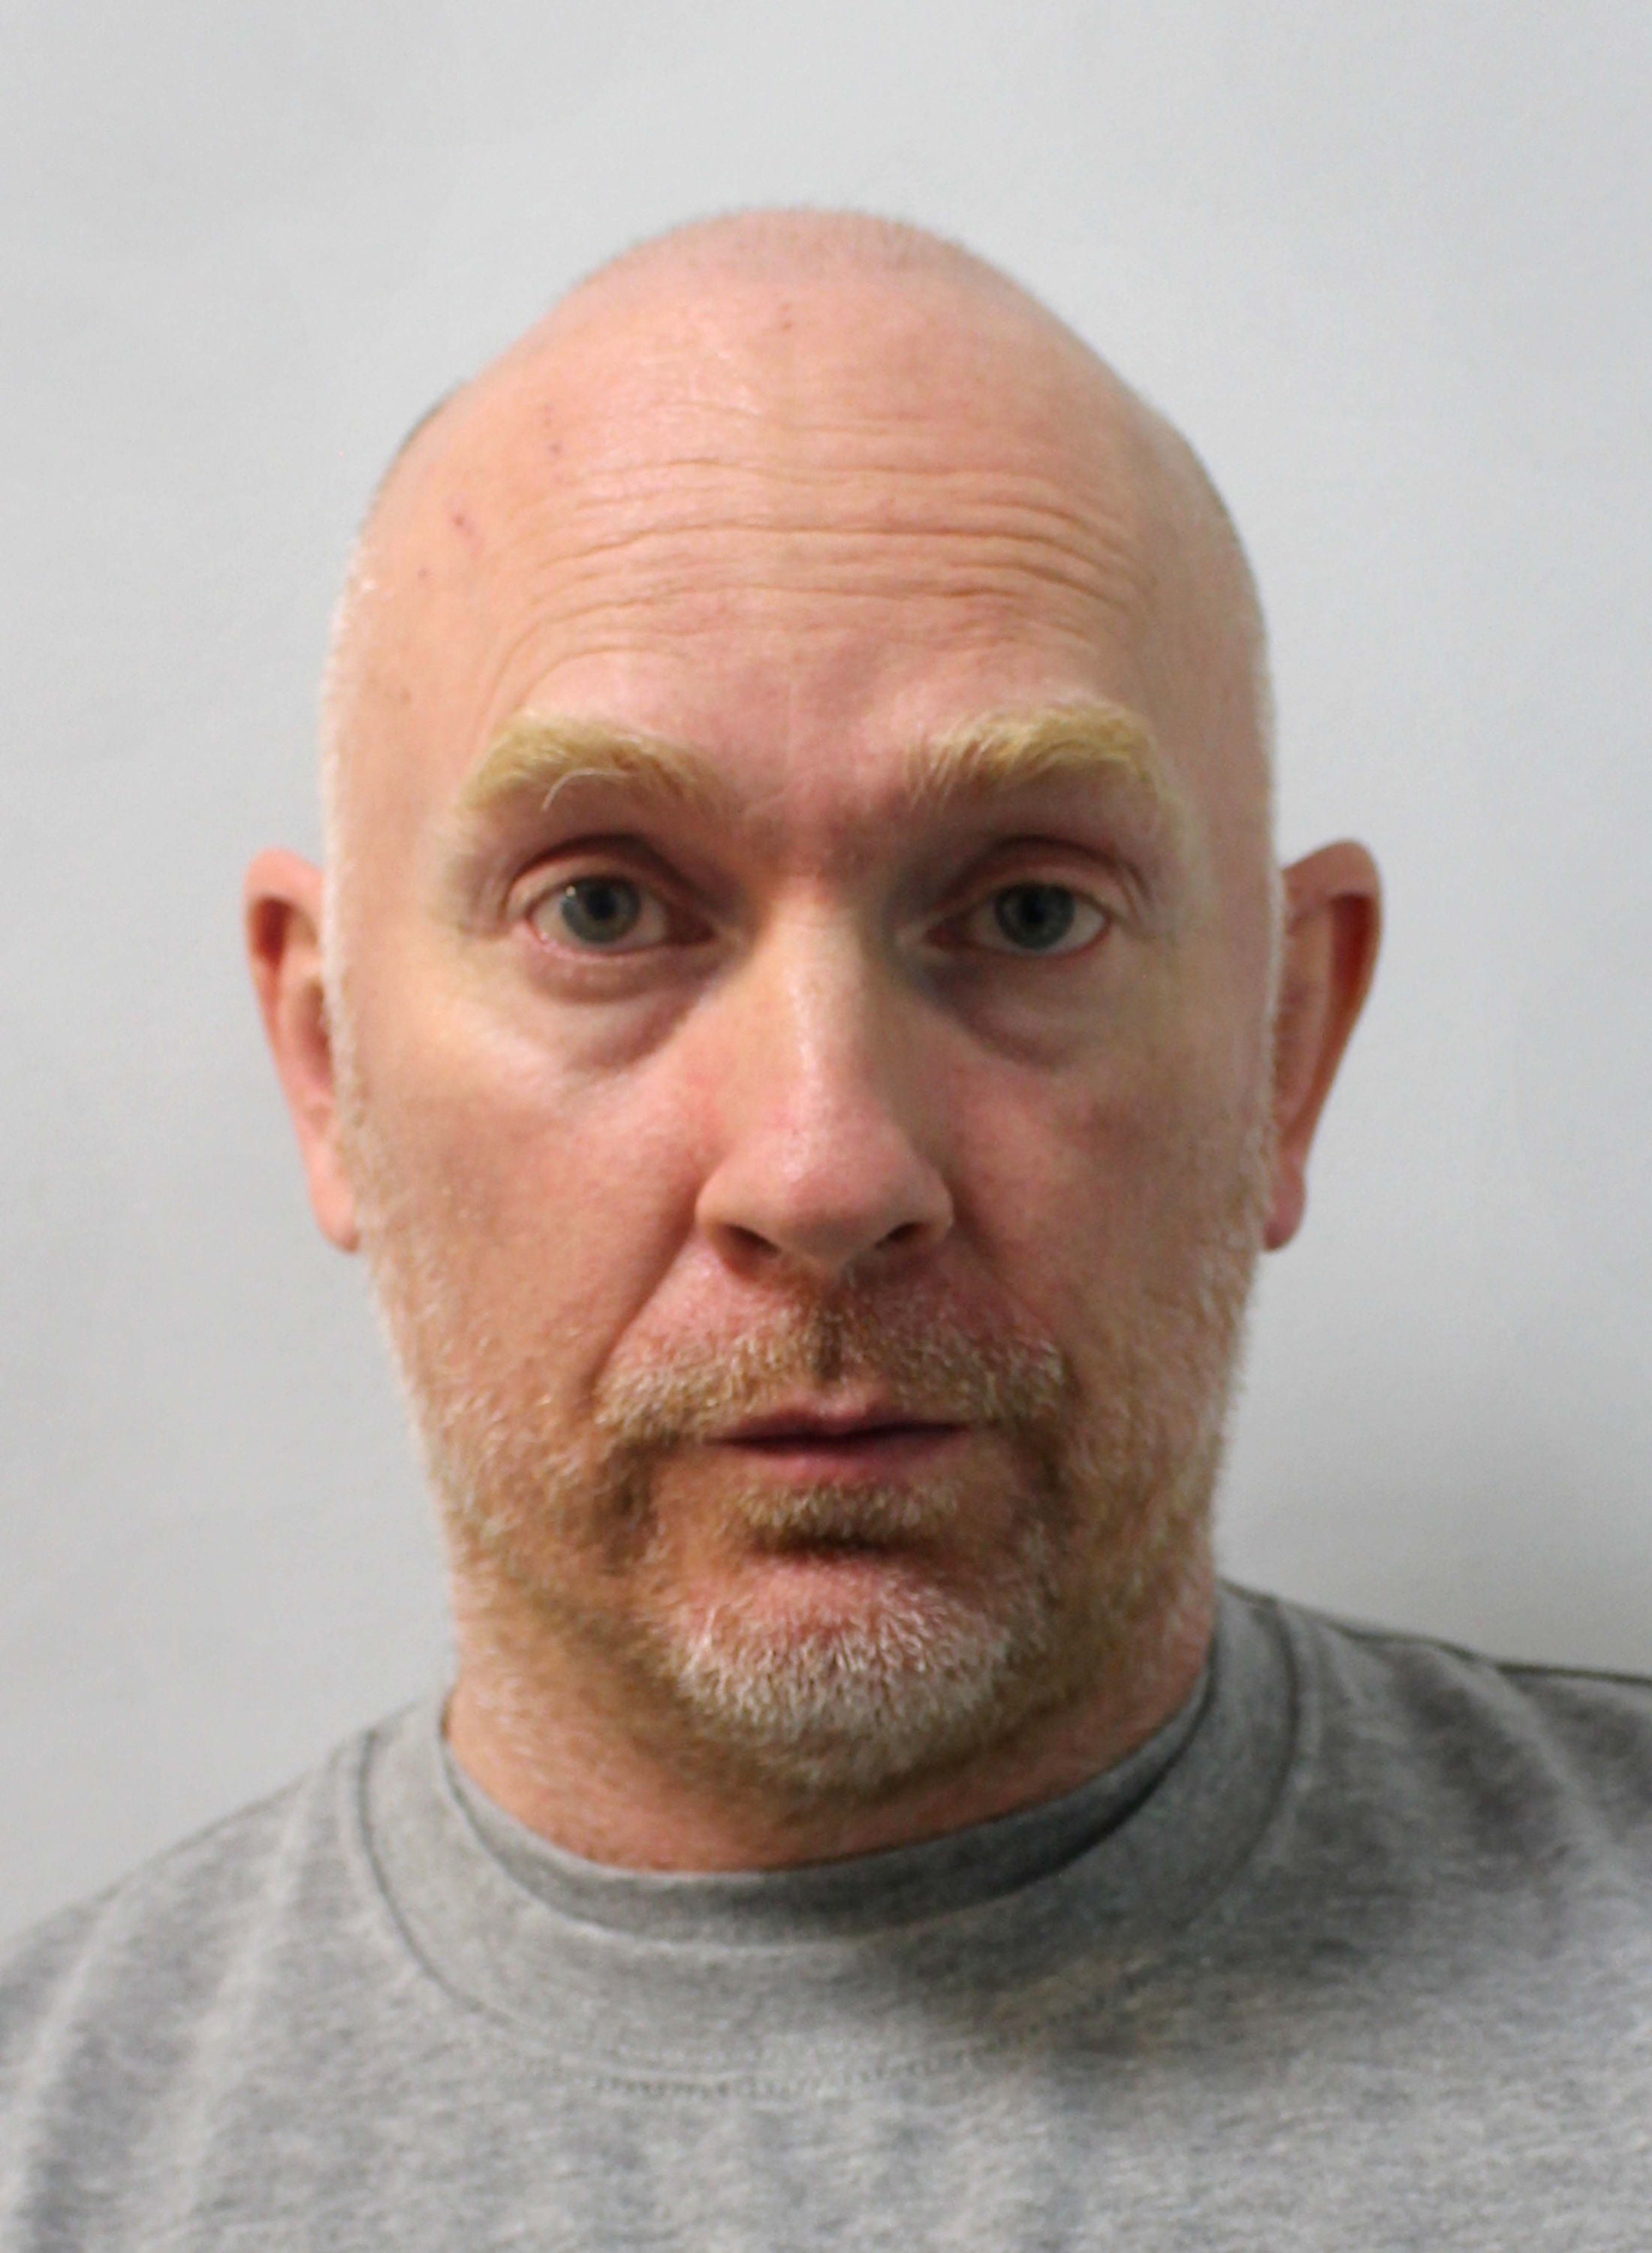 Former Metropolitan Police officer Wayne Couzens is currently in prison serving a life sentence